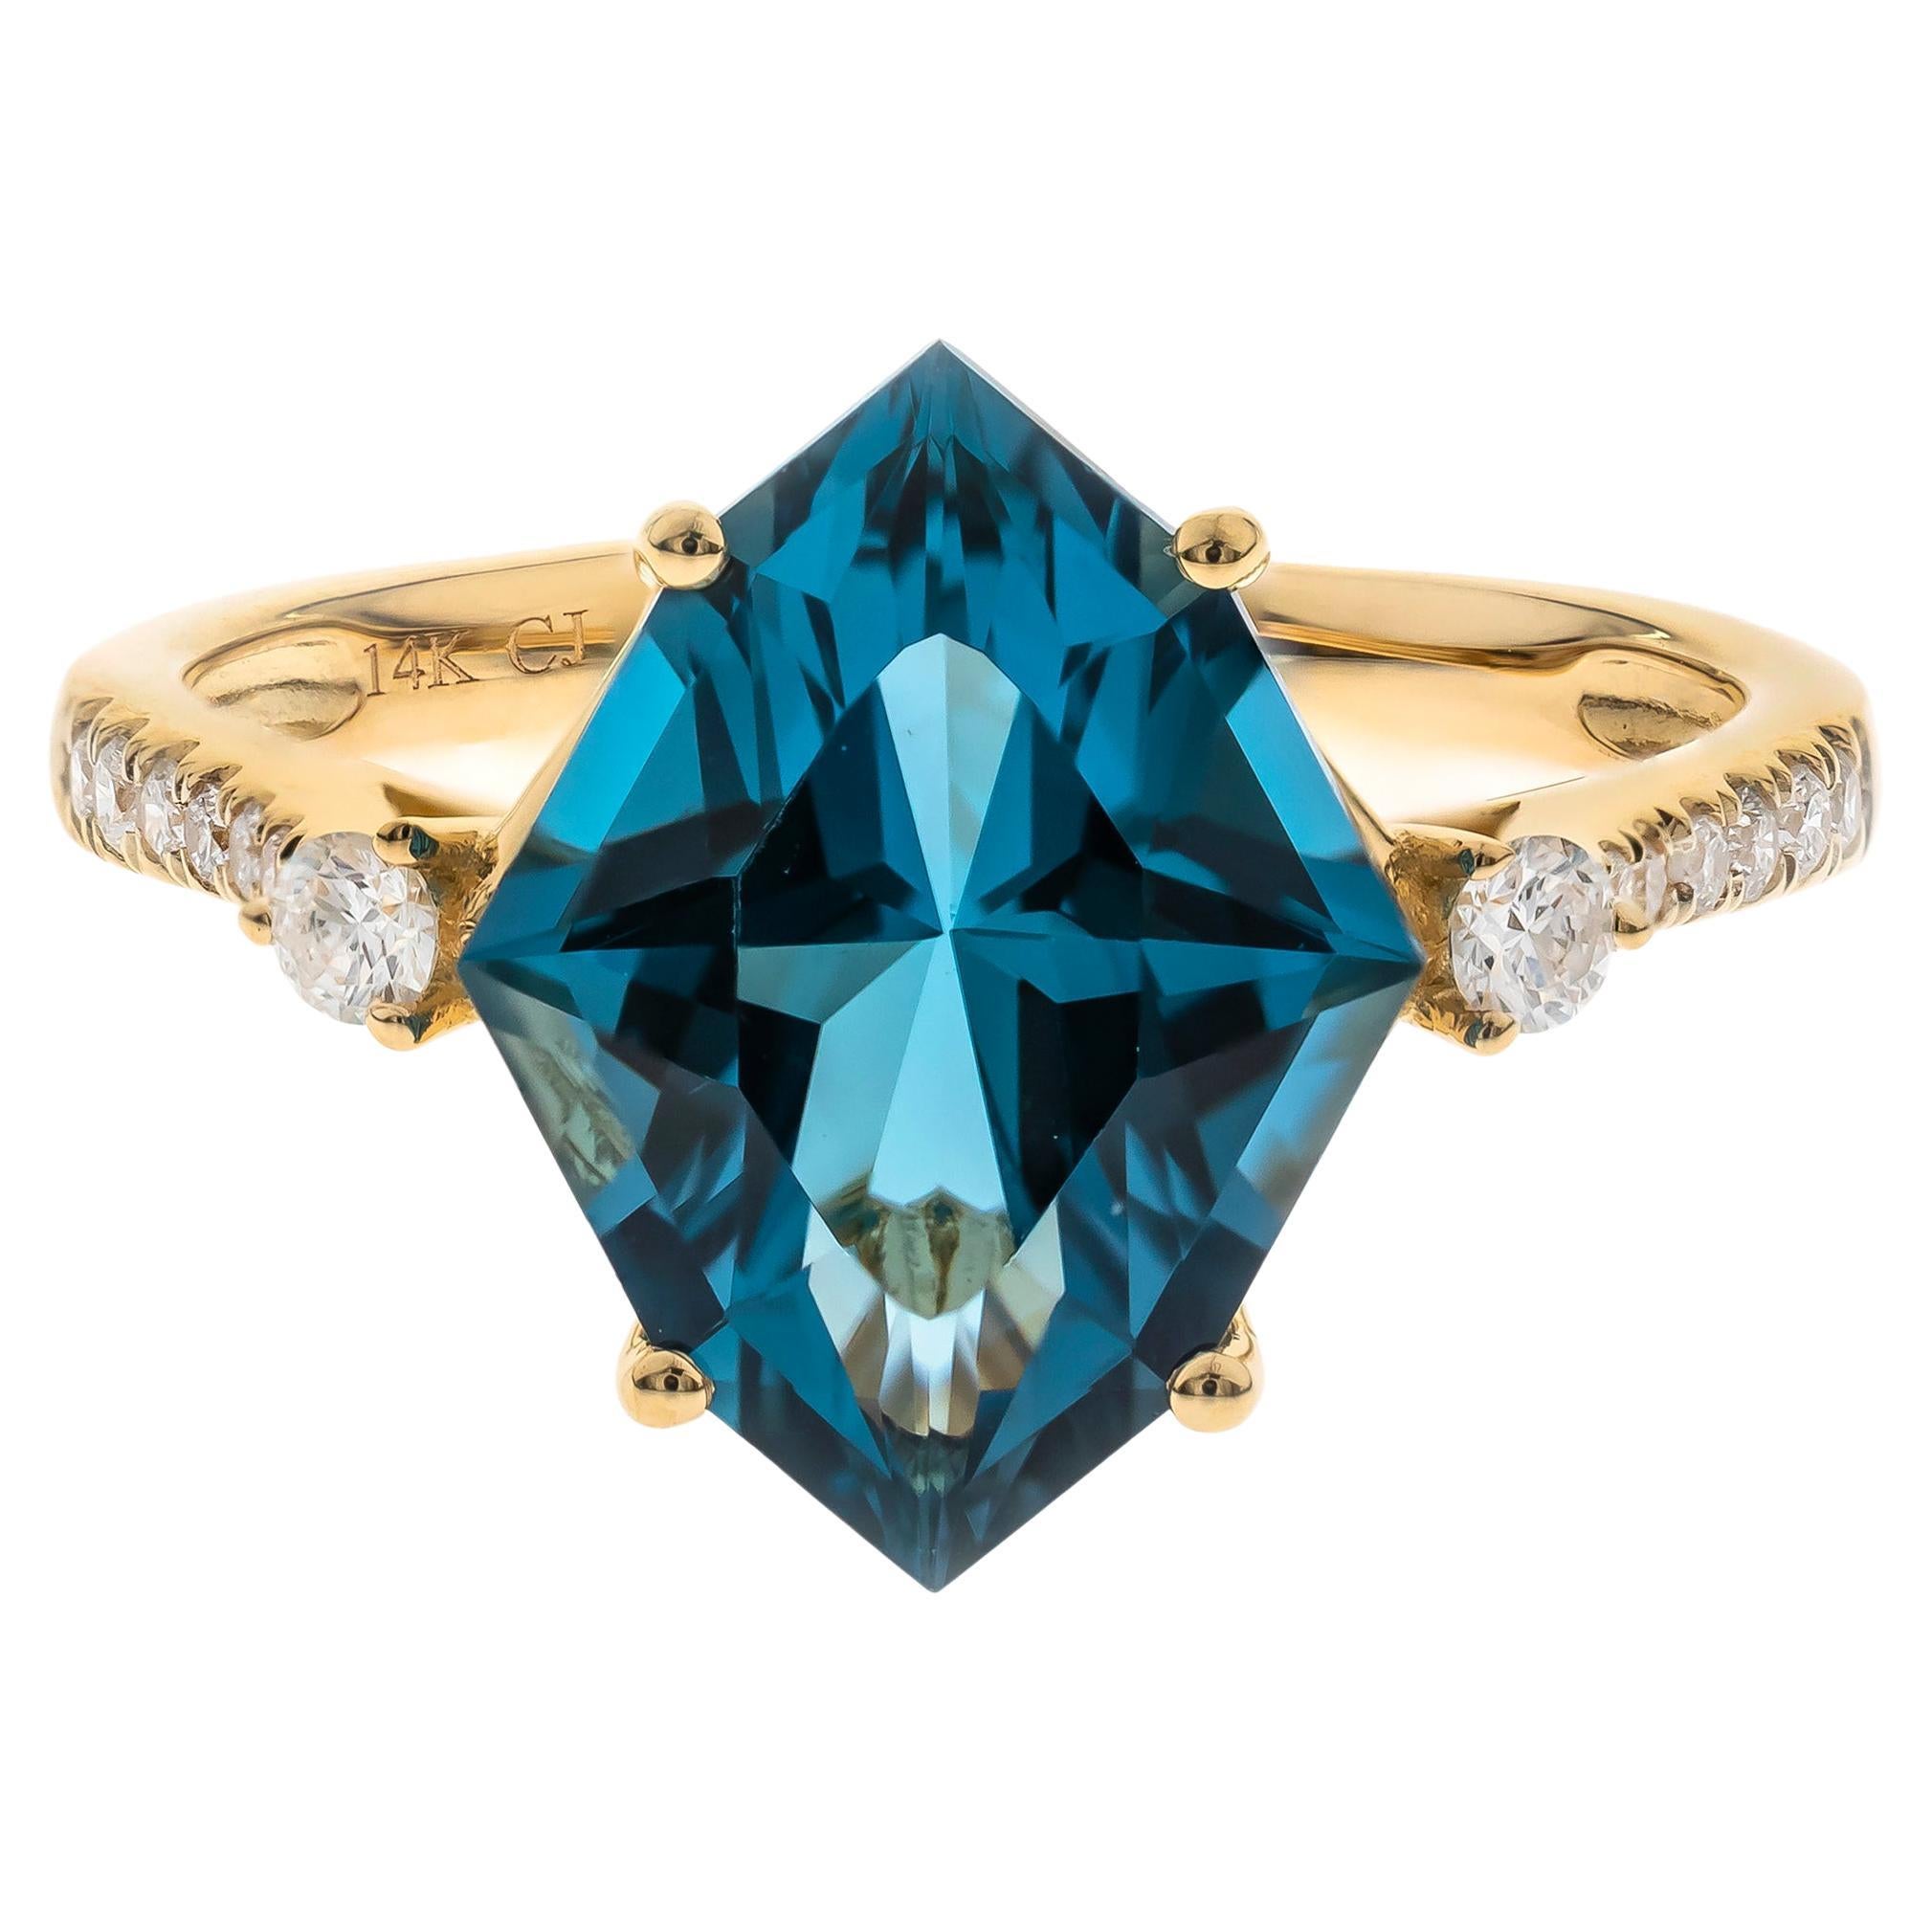 4.63 Carat Marquise-Cut London Blue Topaz Diamond Accents 14K Yellow Gold Ring